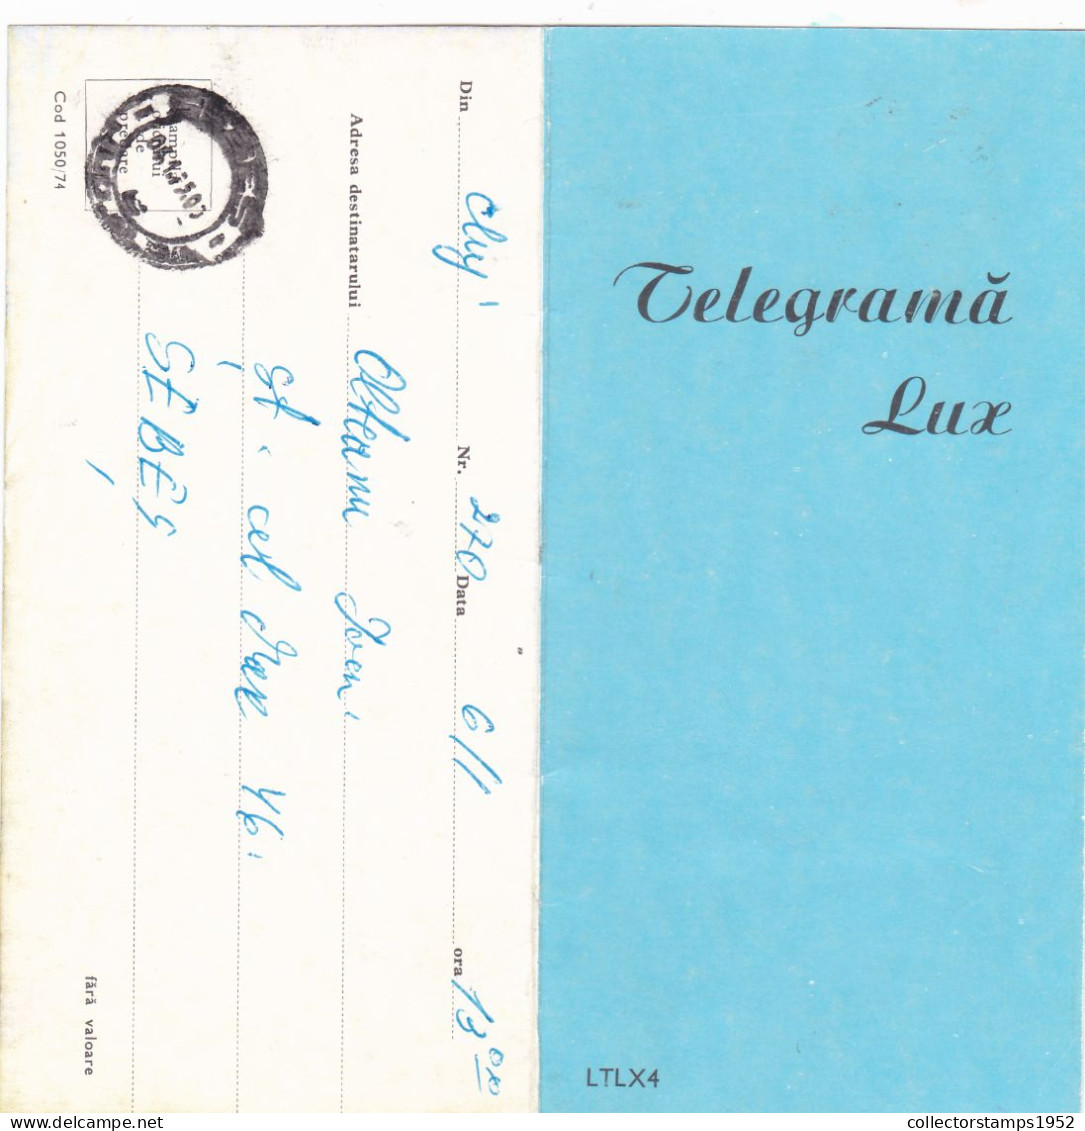 ARHITECTURE,TELEGRAM, TELEGRAPH, 1974, ROMANIA,cod.1050/74,LTLX4. - Telegraph